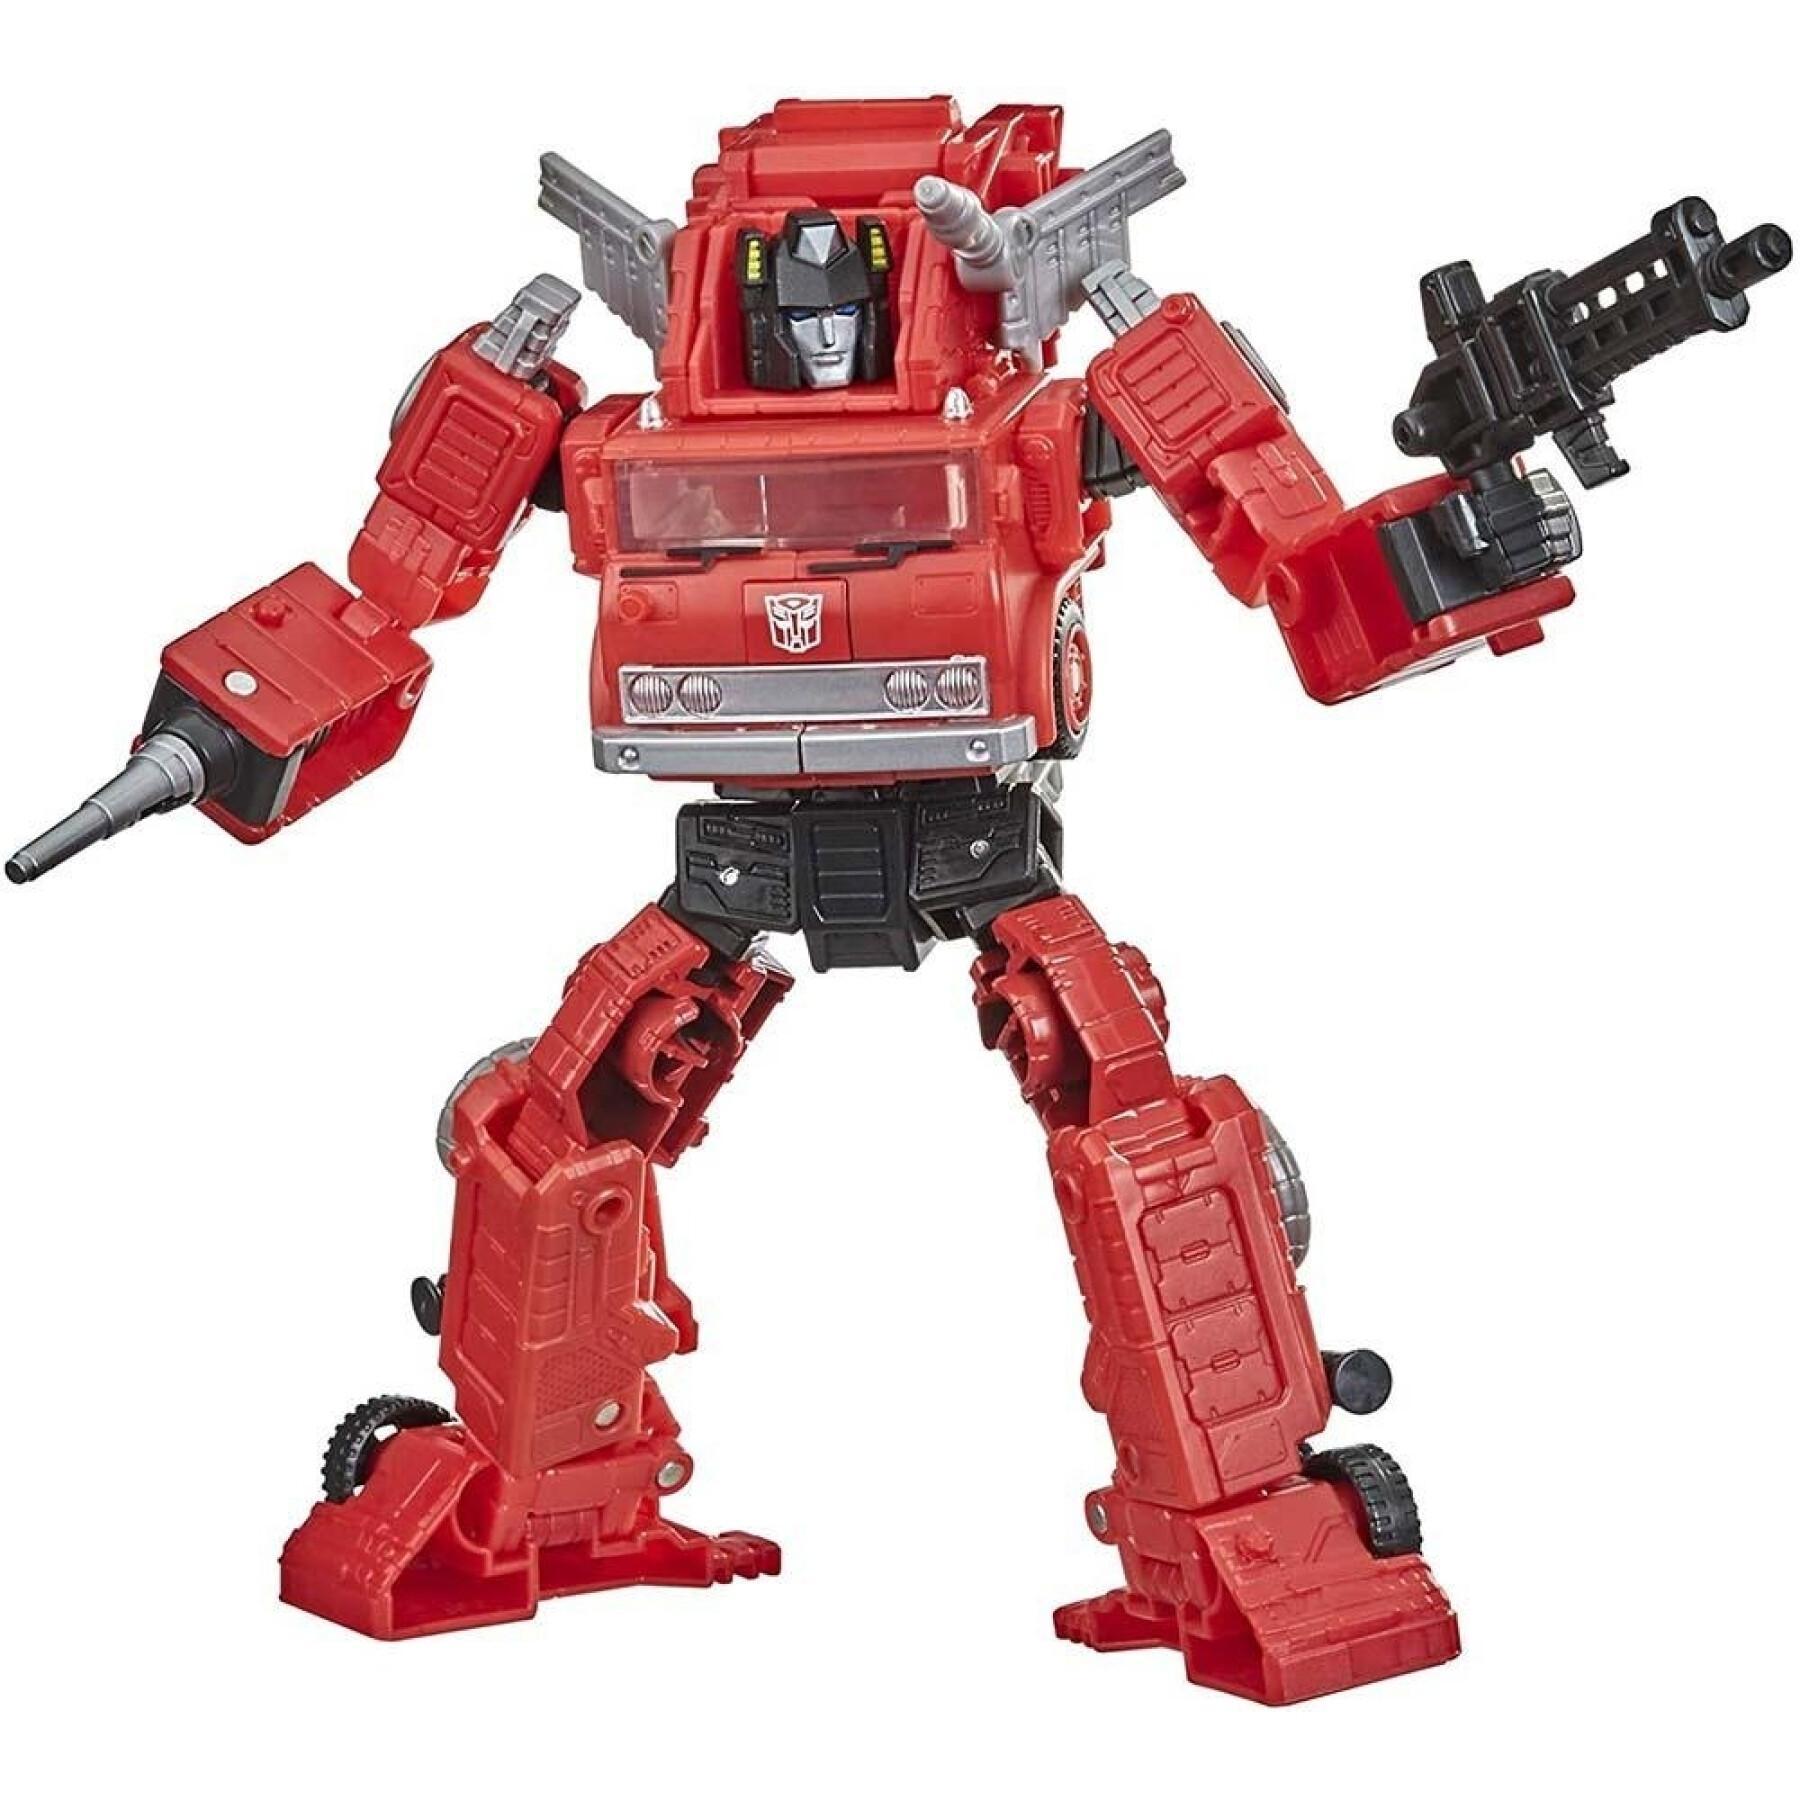 Figurine Hasbro Transformers Generation WFC Voyager